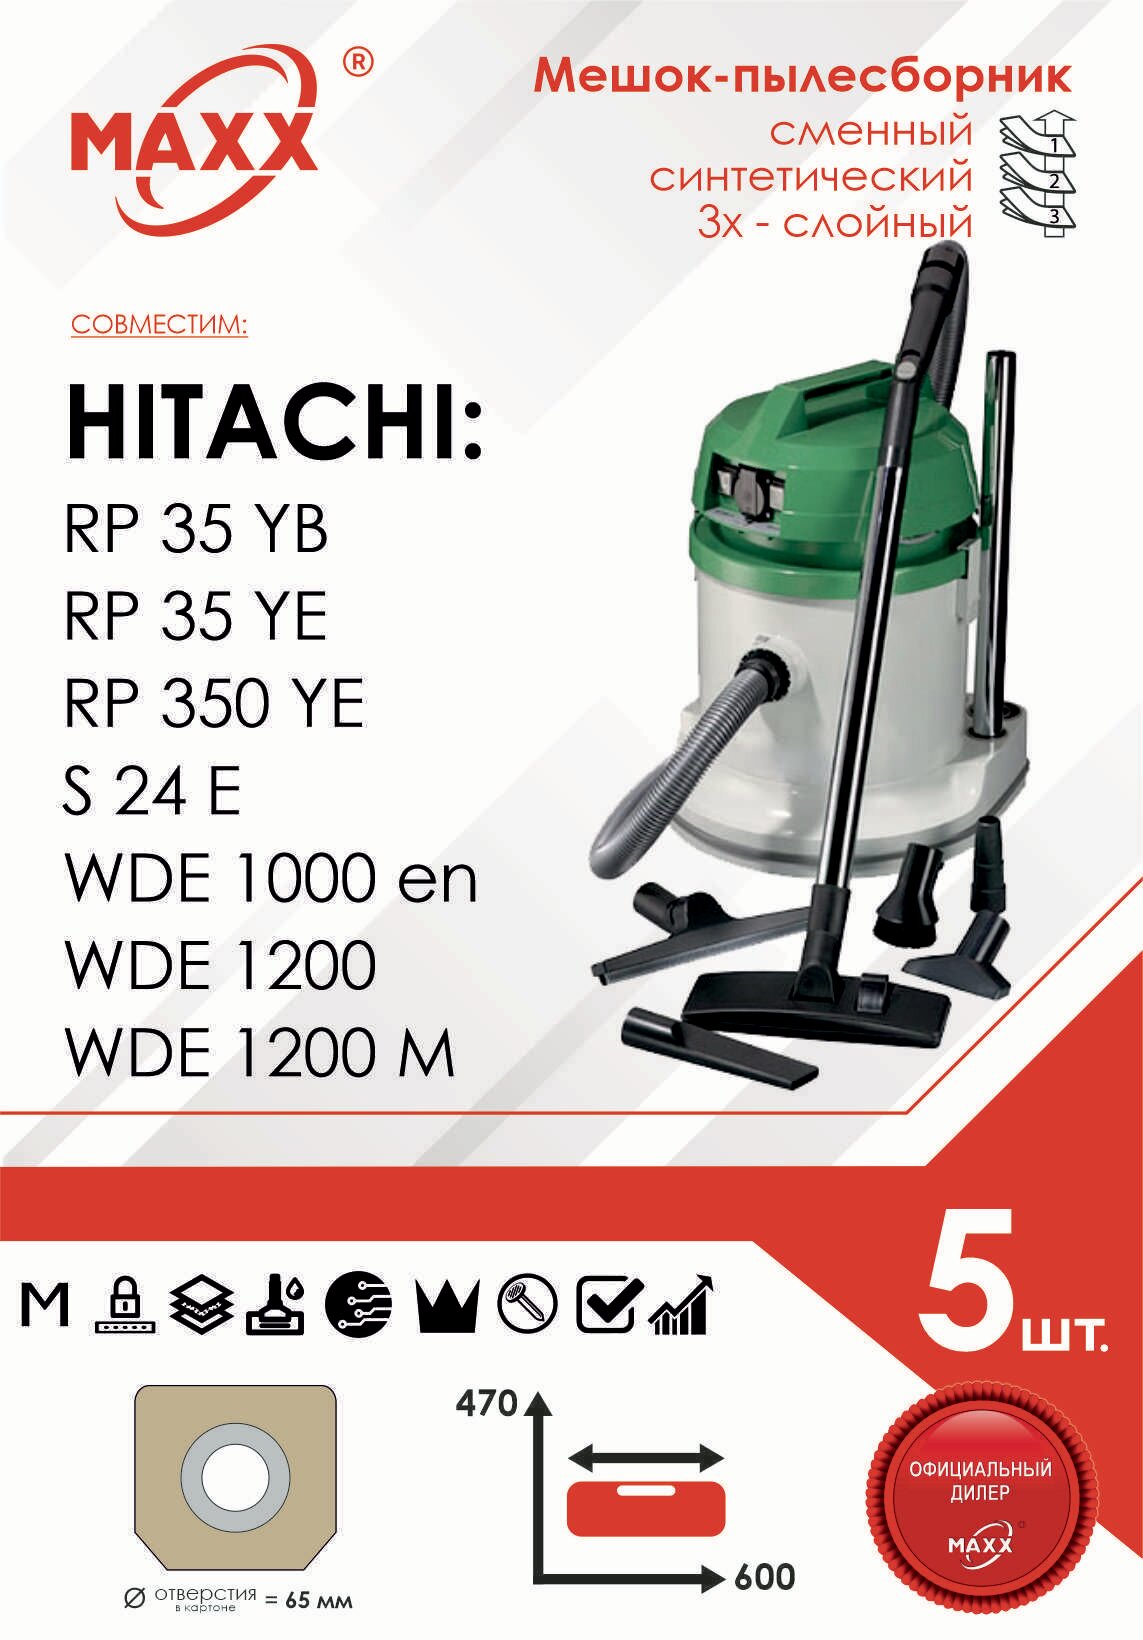 Мешок - пылесборник 5 шт. для пылесоса Hitachi WDE1200, RP350YE, S 24 E